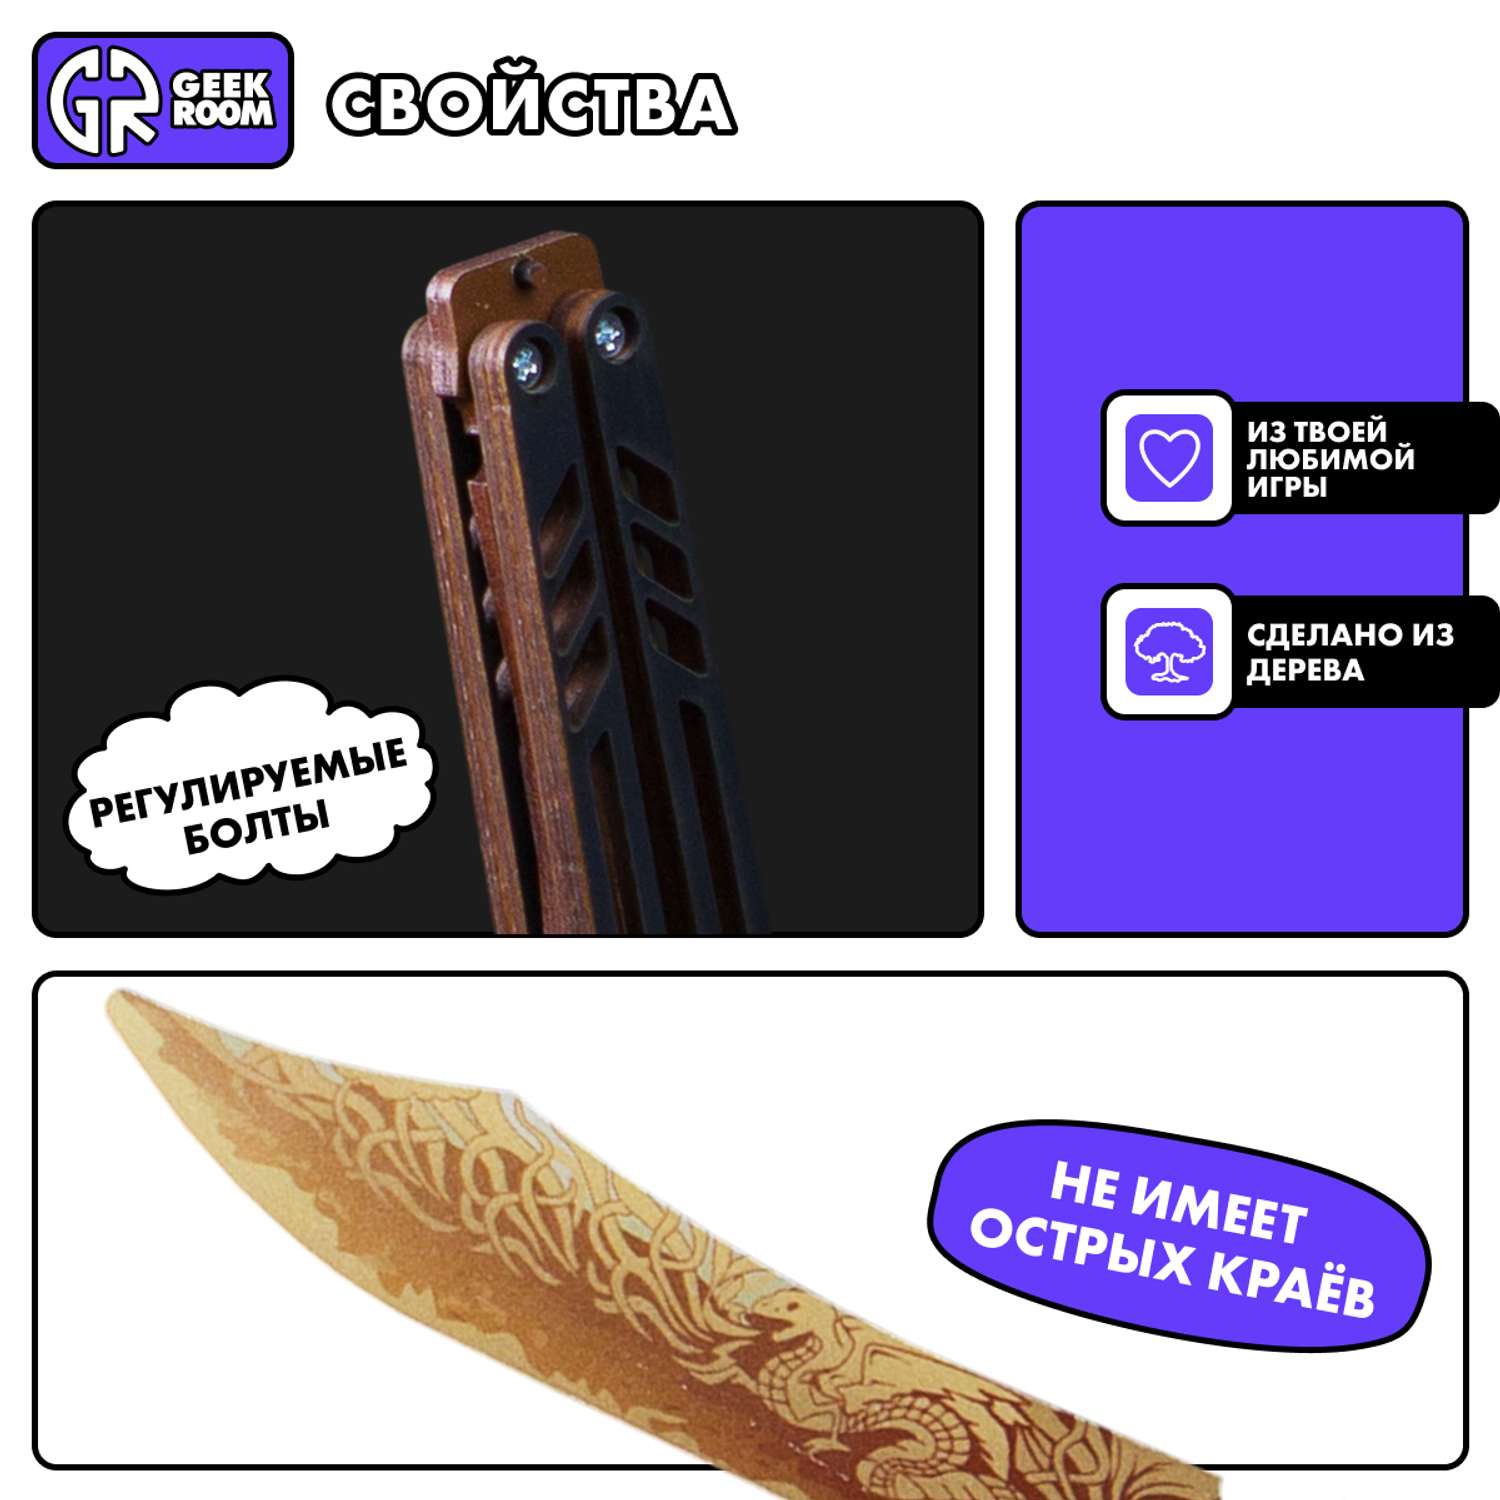 Нож бабочка GEEKROOM Legacy деревянный сувенирный - фото 2